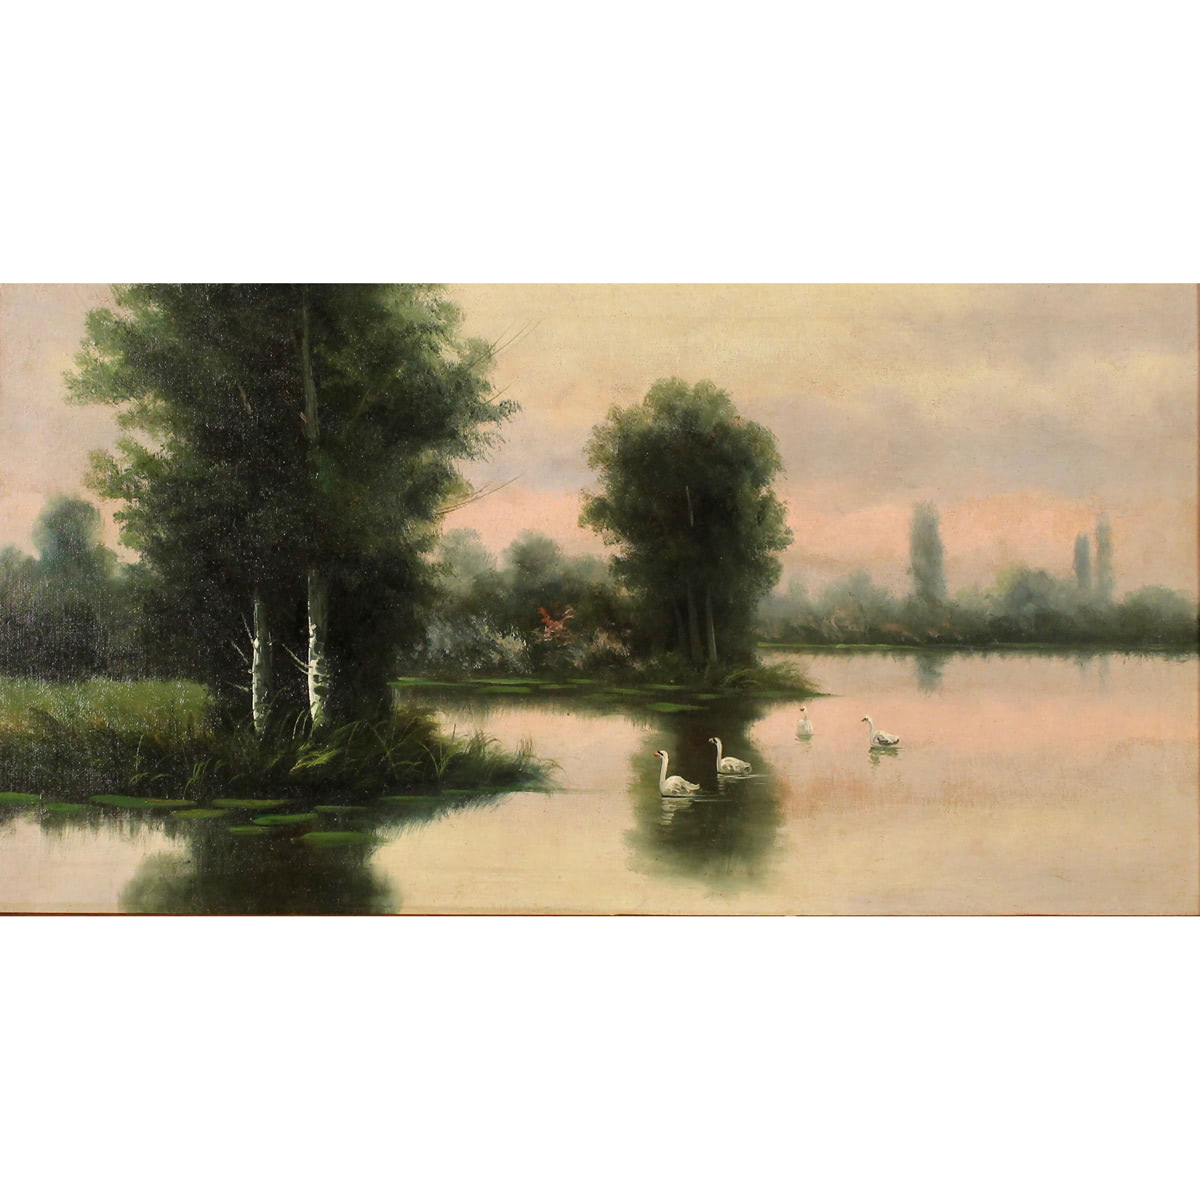 SCUOLA DI EMILIO SANCHEZ PERRIER (1855/1907) "Paesaggio lacustre con cigni" - SCHOOL OF EMILIO SANCHEZ PERRIER (1855/1907) "Lake landscape with swans"